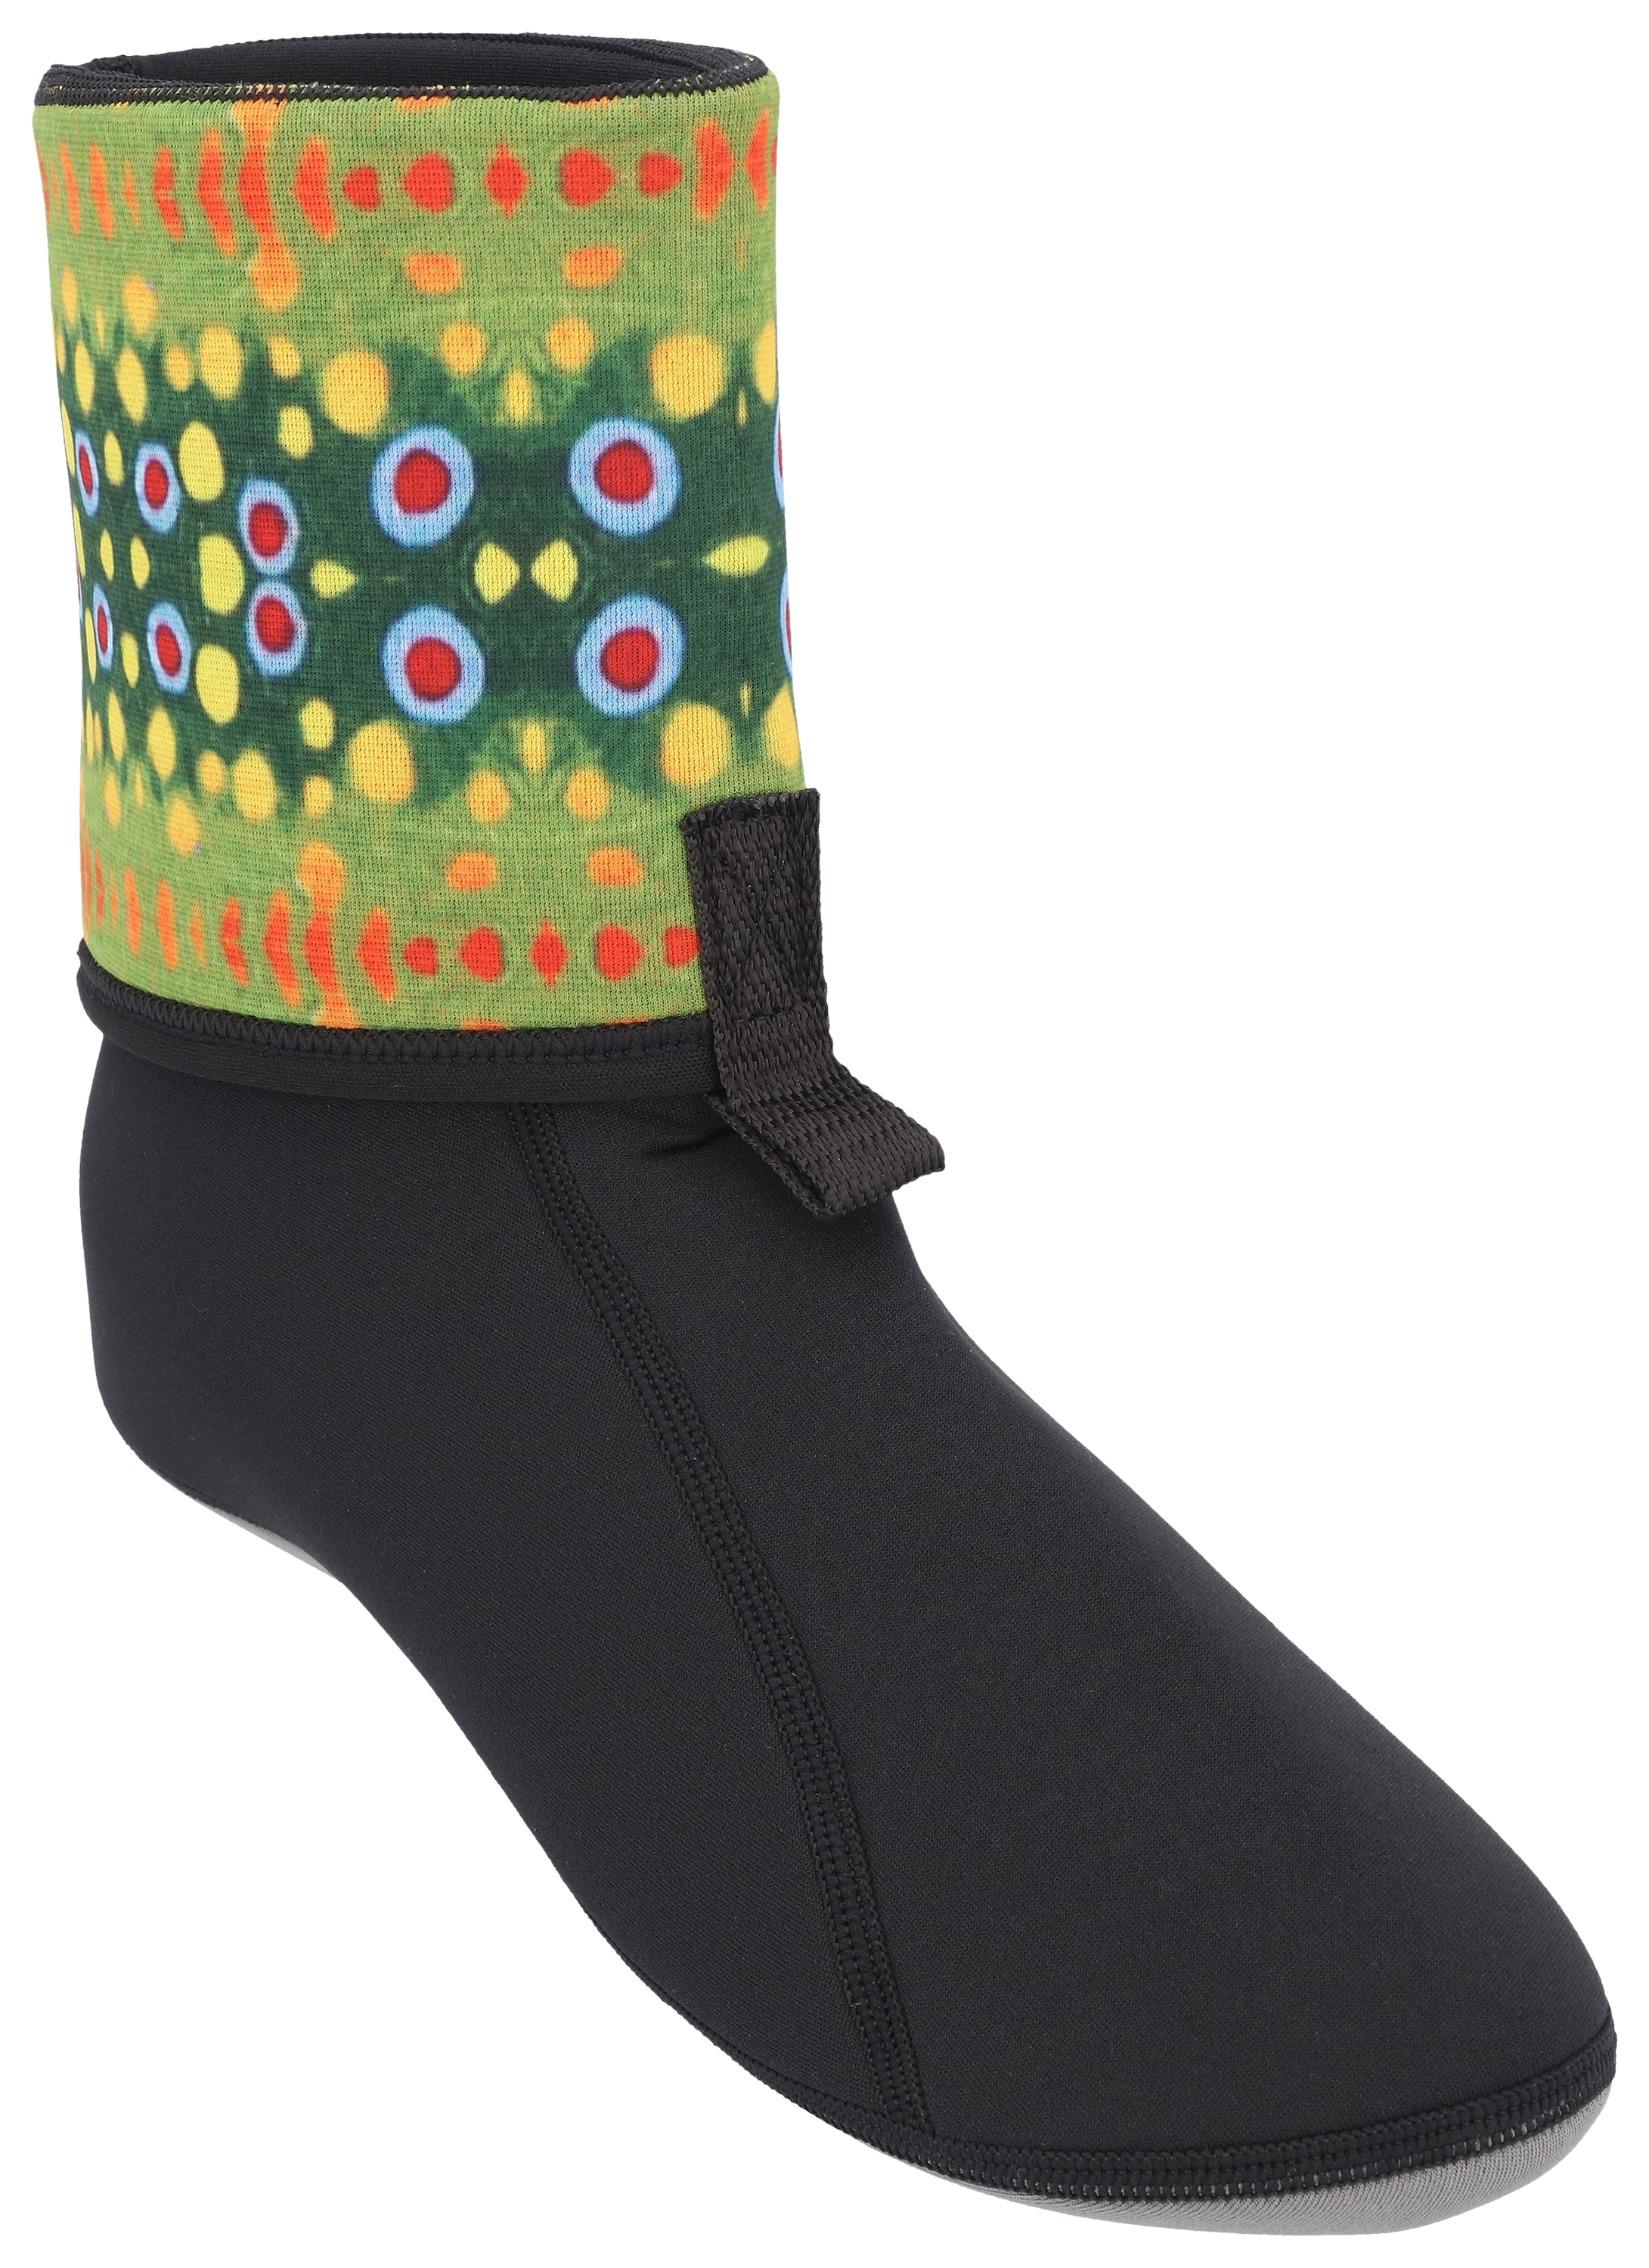 Wingo Neoprene Wading Socks for Men - Brook Trout - XL